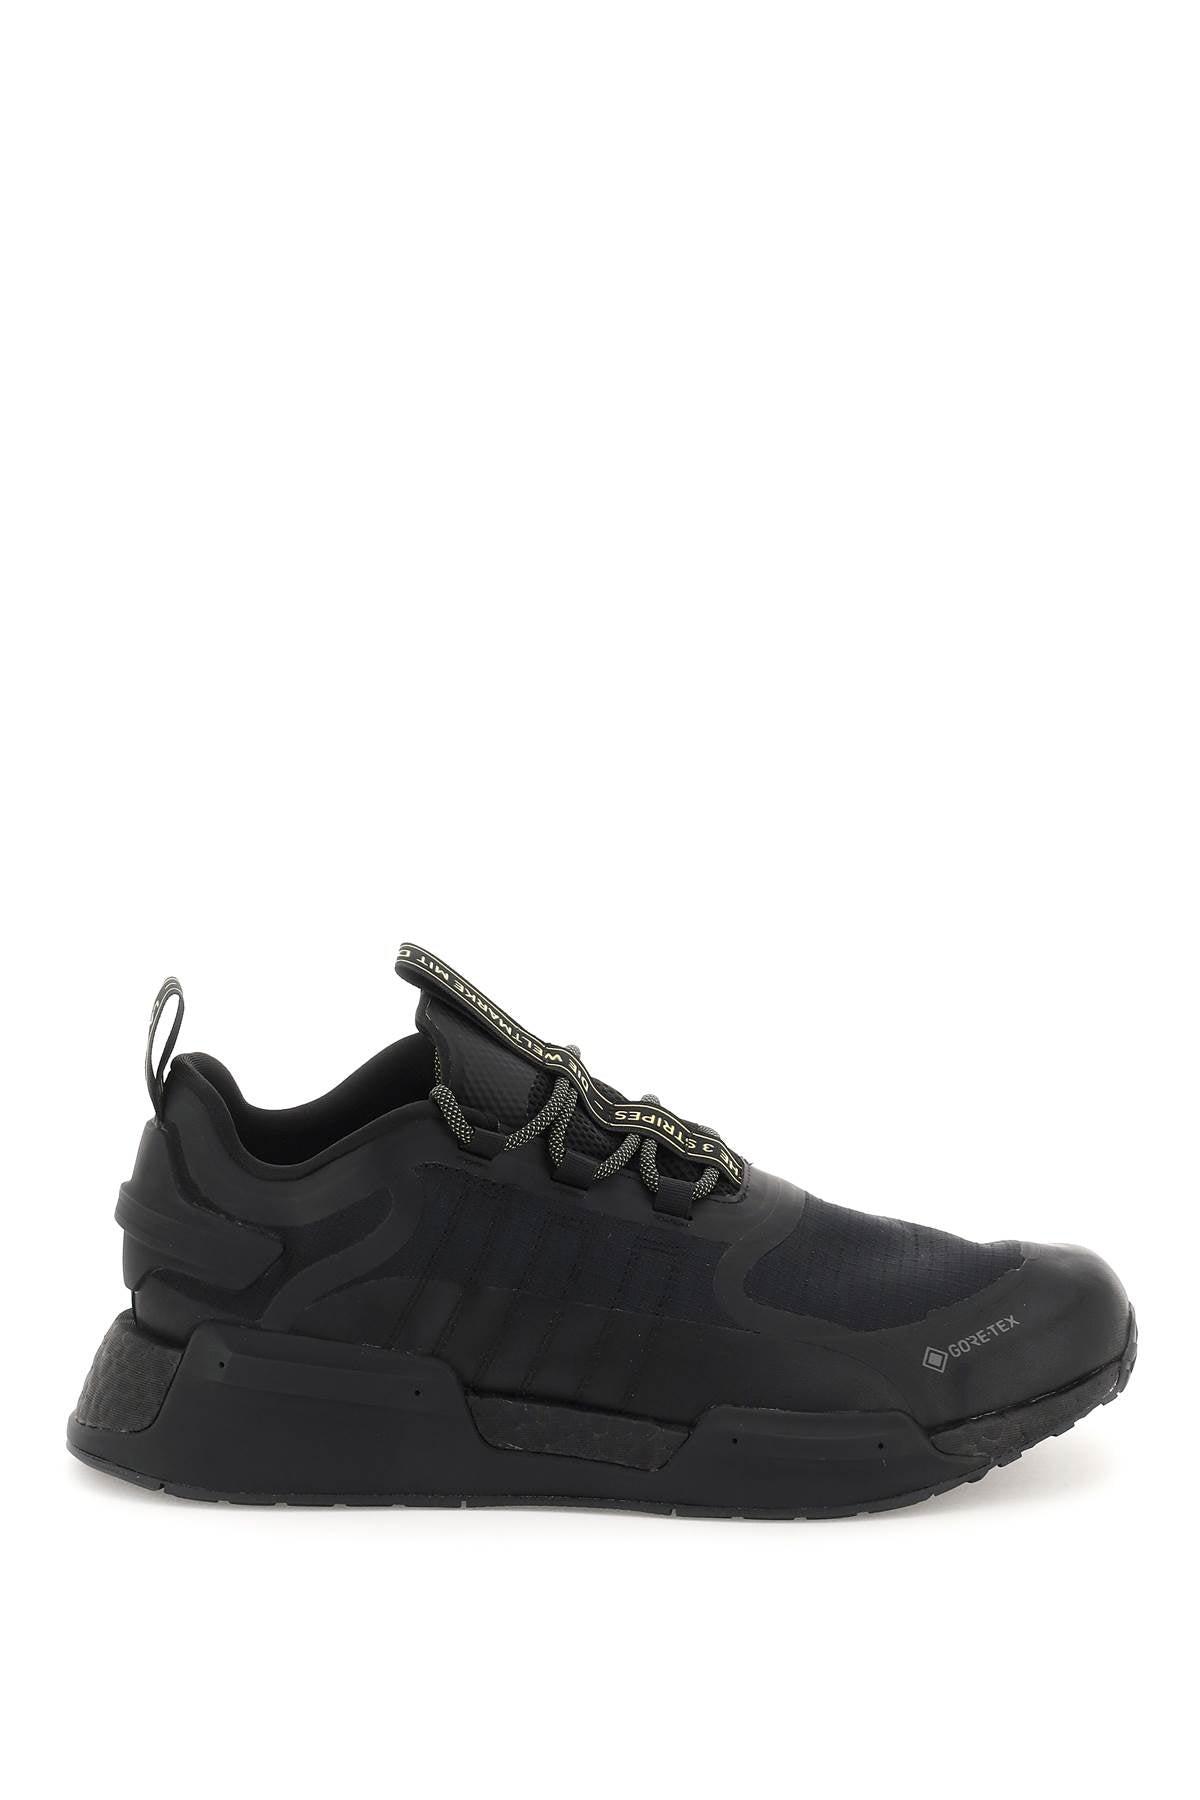 adidas Originals Nmd V3 Gore-tex Sneakers in Black for Men | Lyst